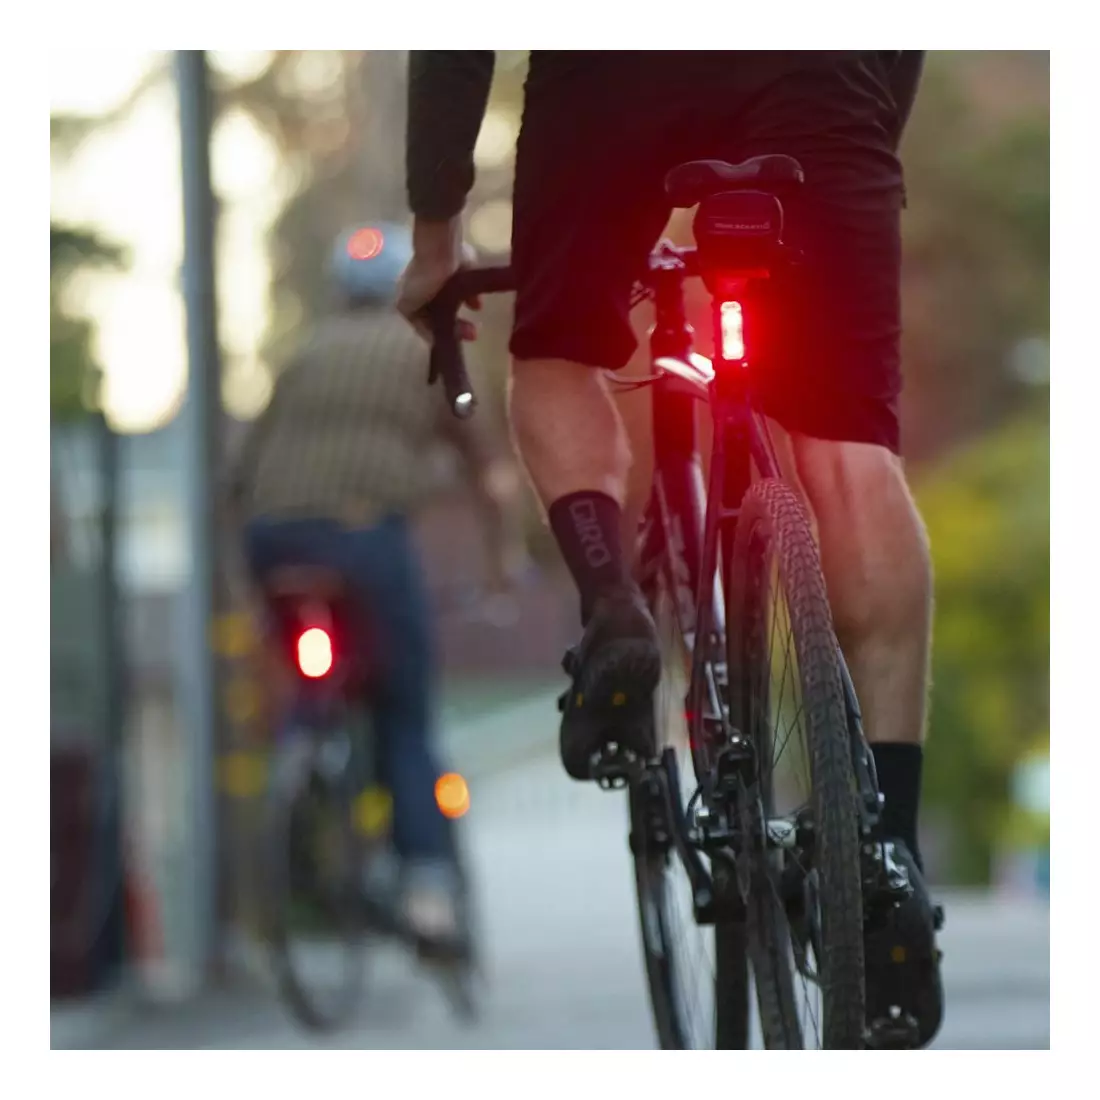 BLACKBURN set of bicycle lights LUMINATE 360 blitz front + back + side